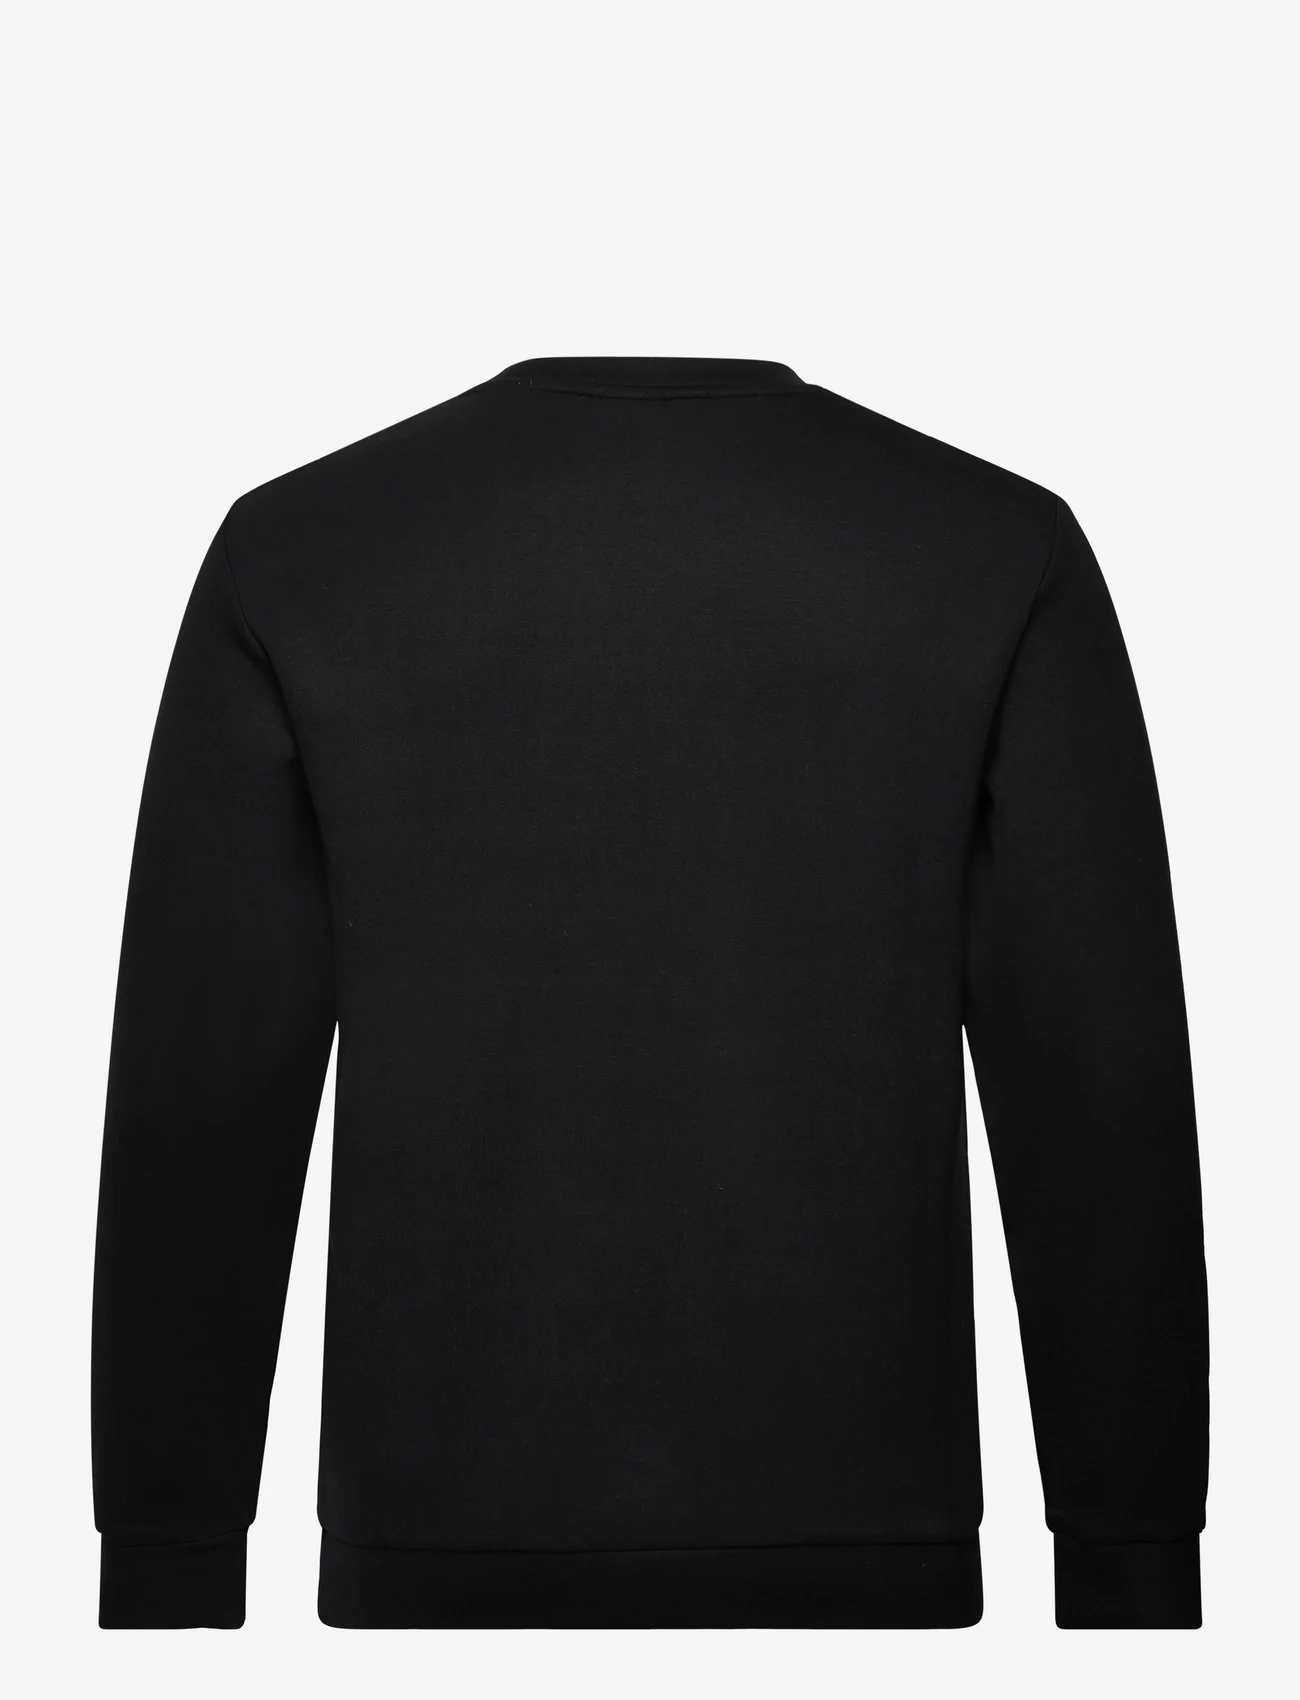 Selected Homme - SLHEMANUEL SOFT CREW NECK SWEAT NOOS - truien en hoodies - black - 1